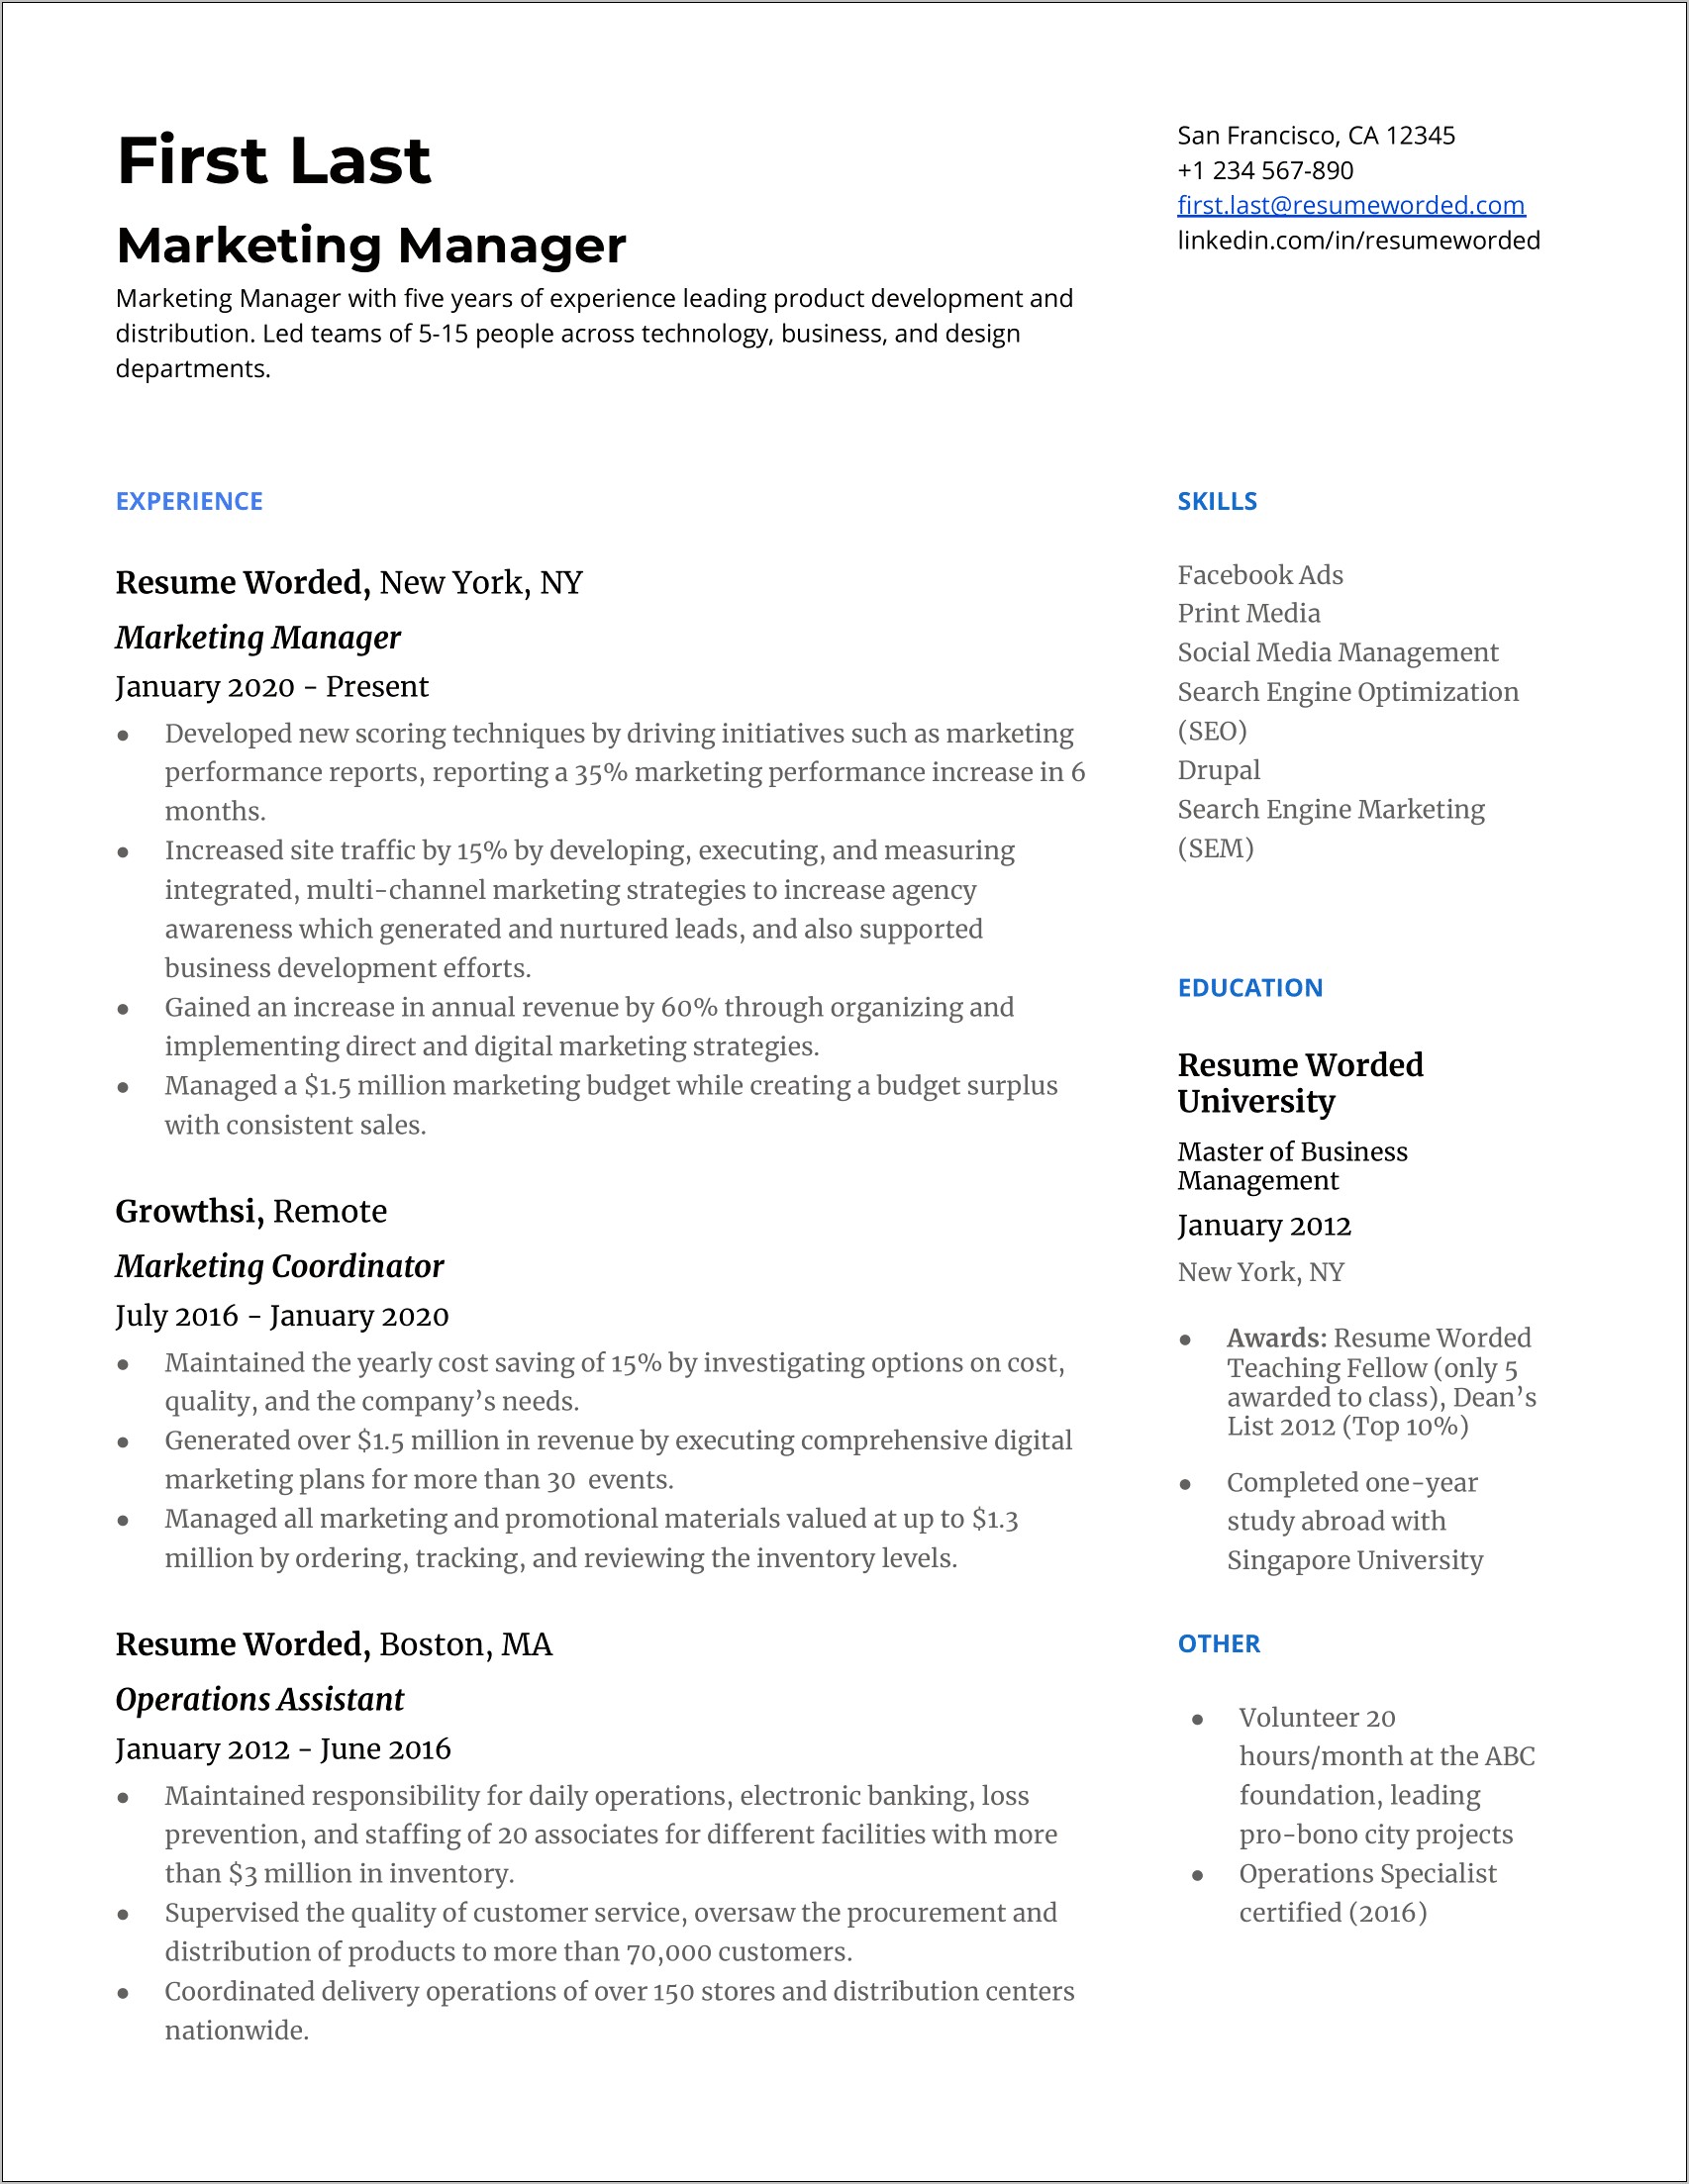 Resume Skills For Marketing Manager